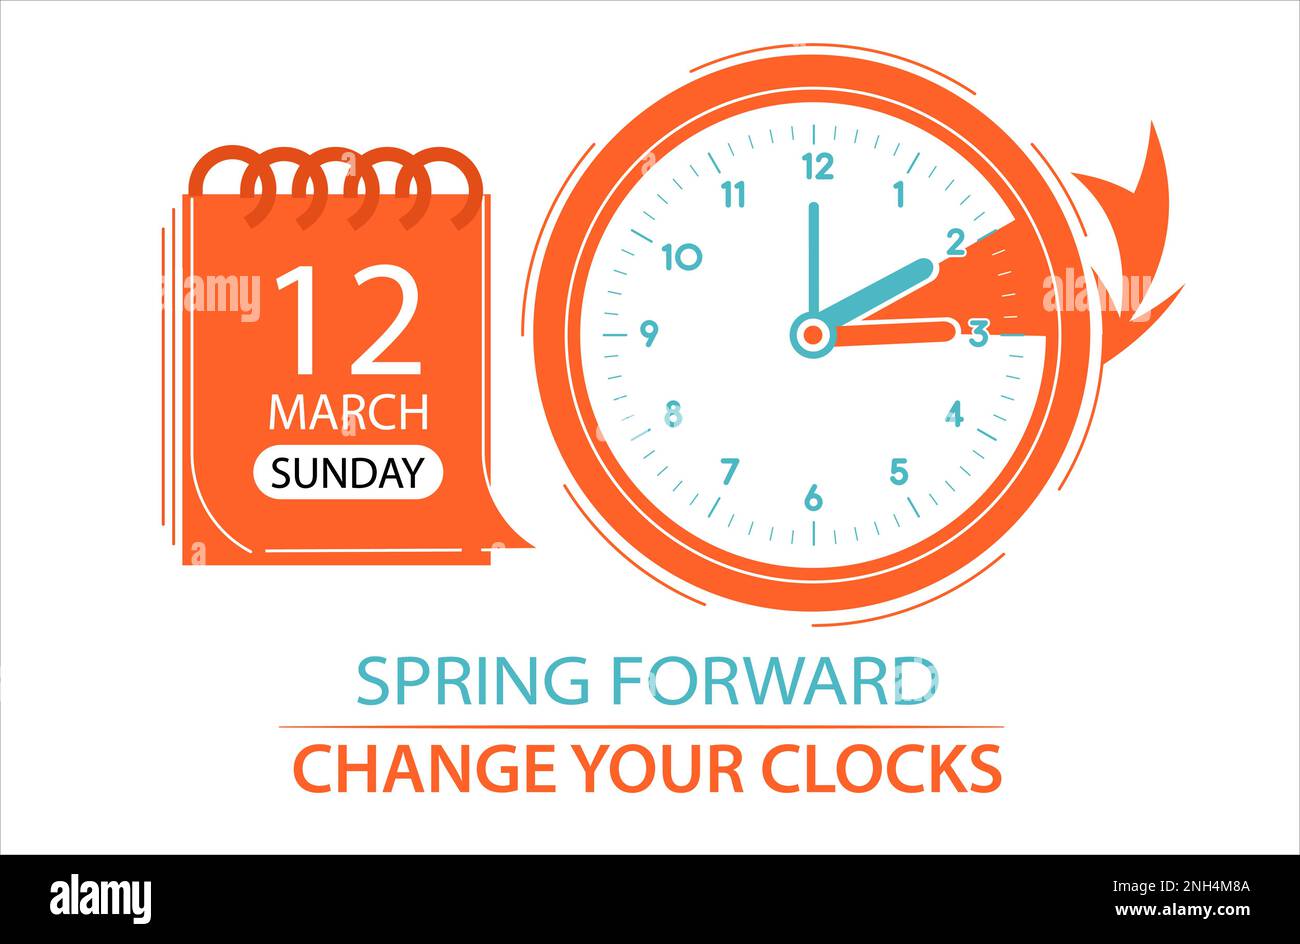 Daylight savings time change 2023 starts Sunday with “spring forward”